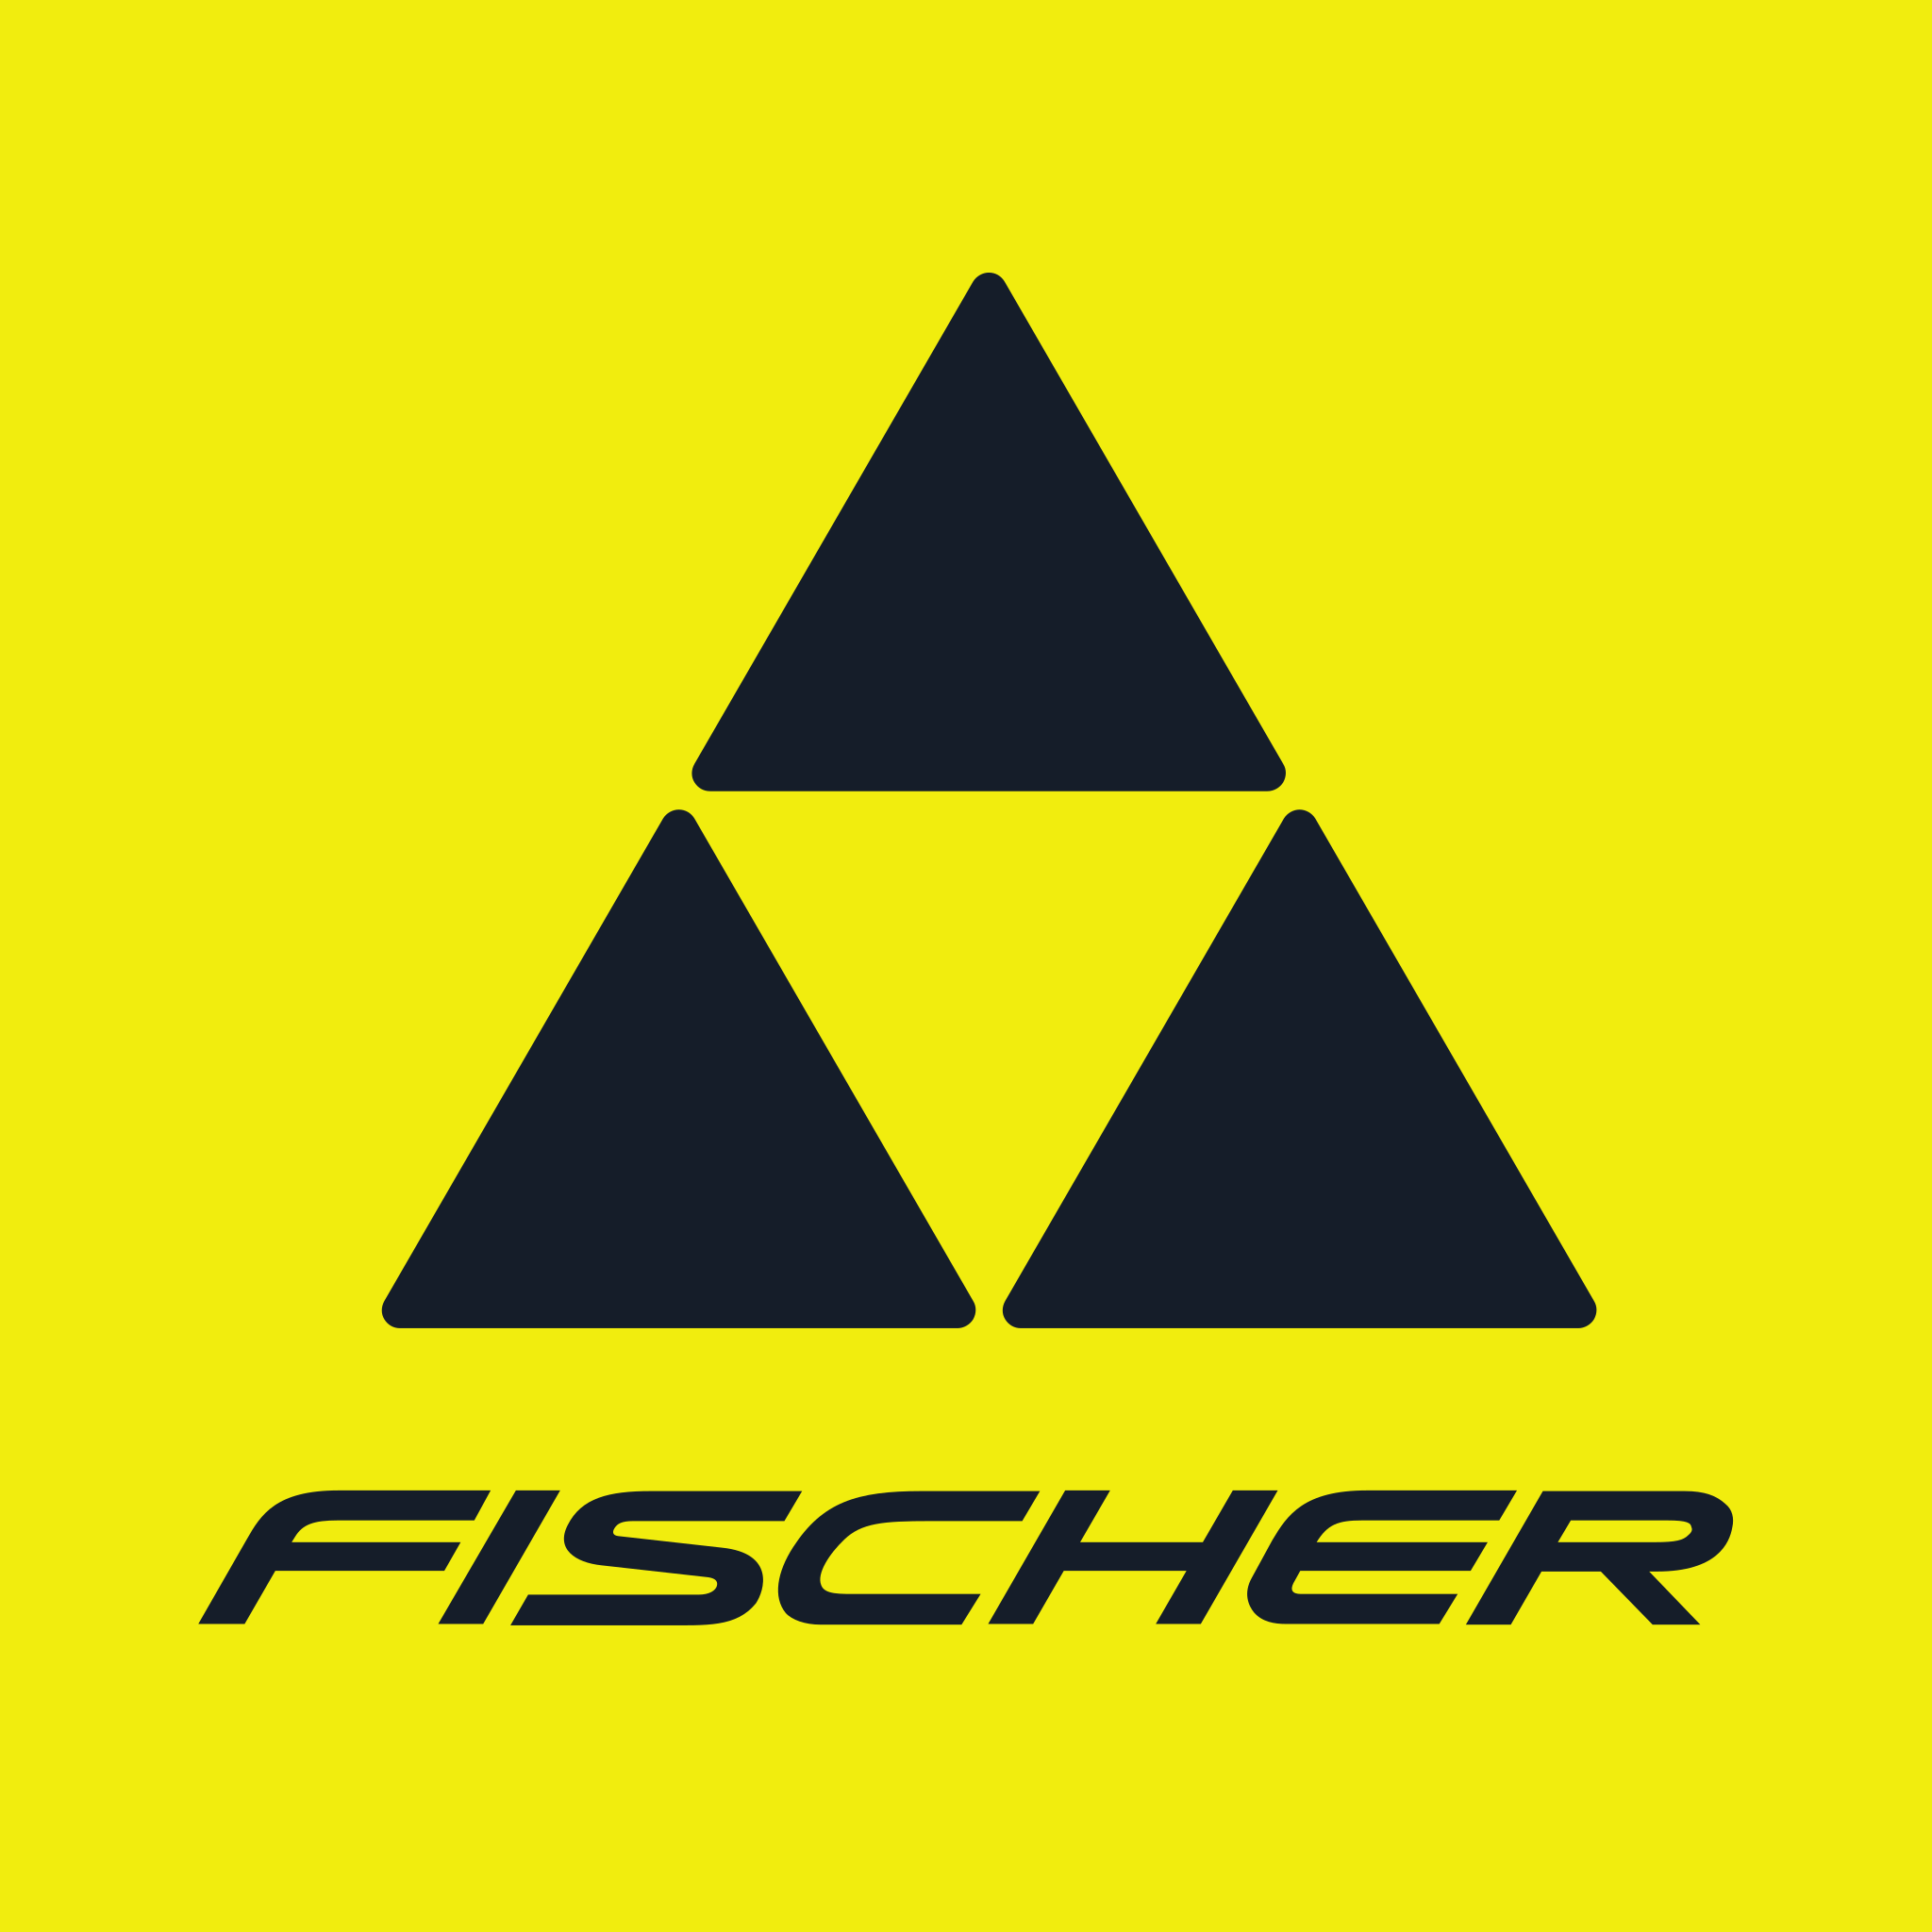 Fischer_logo.svg.png (30 KB)